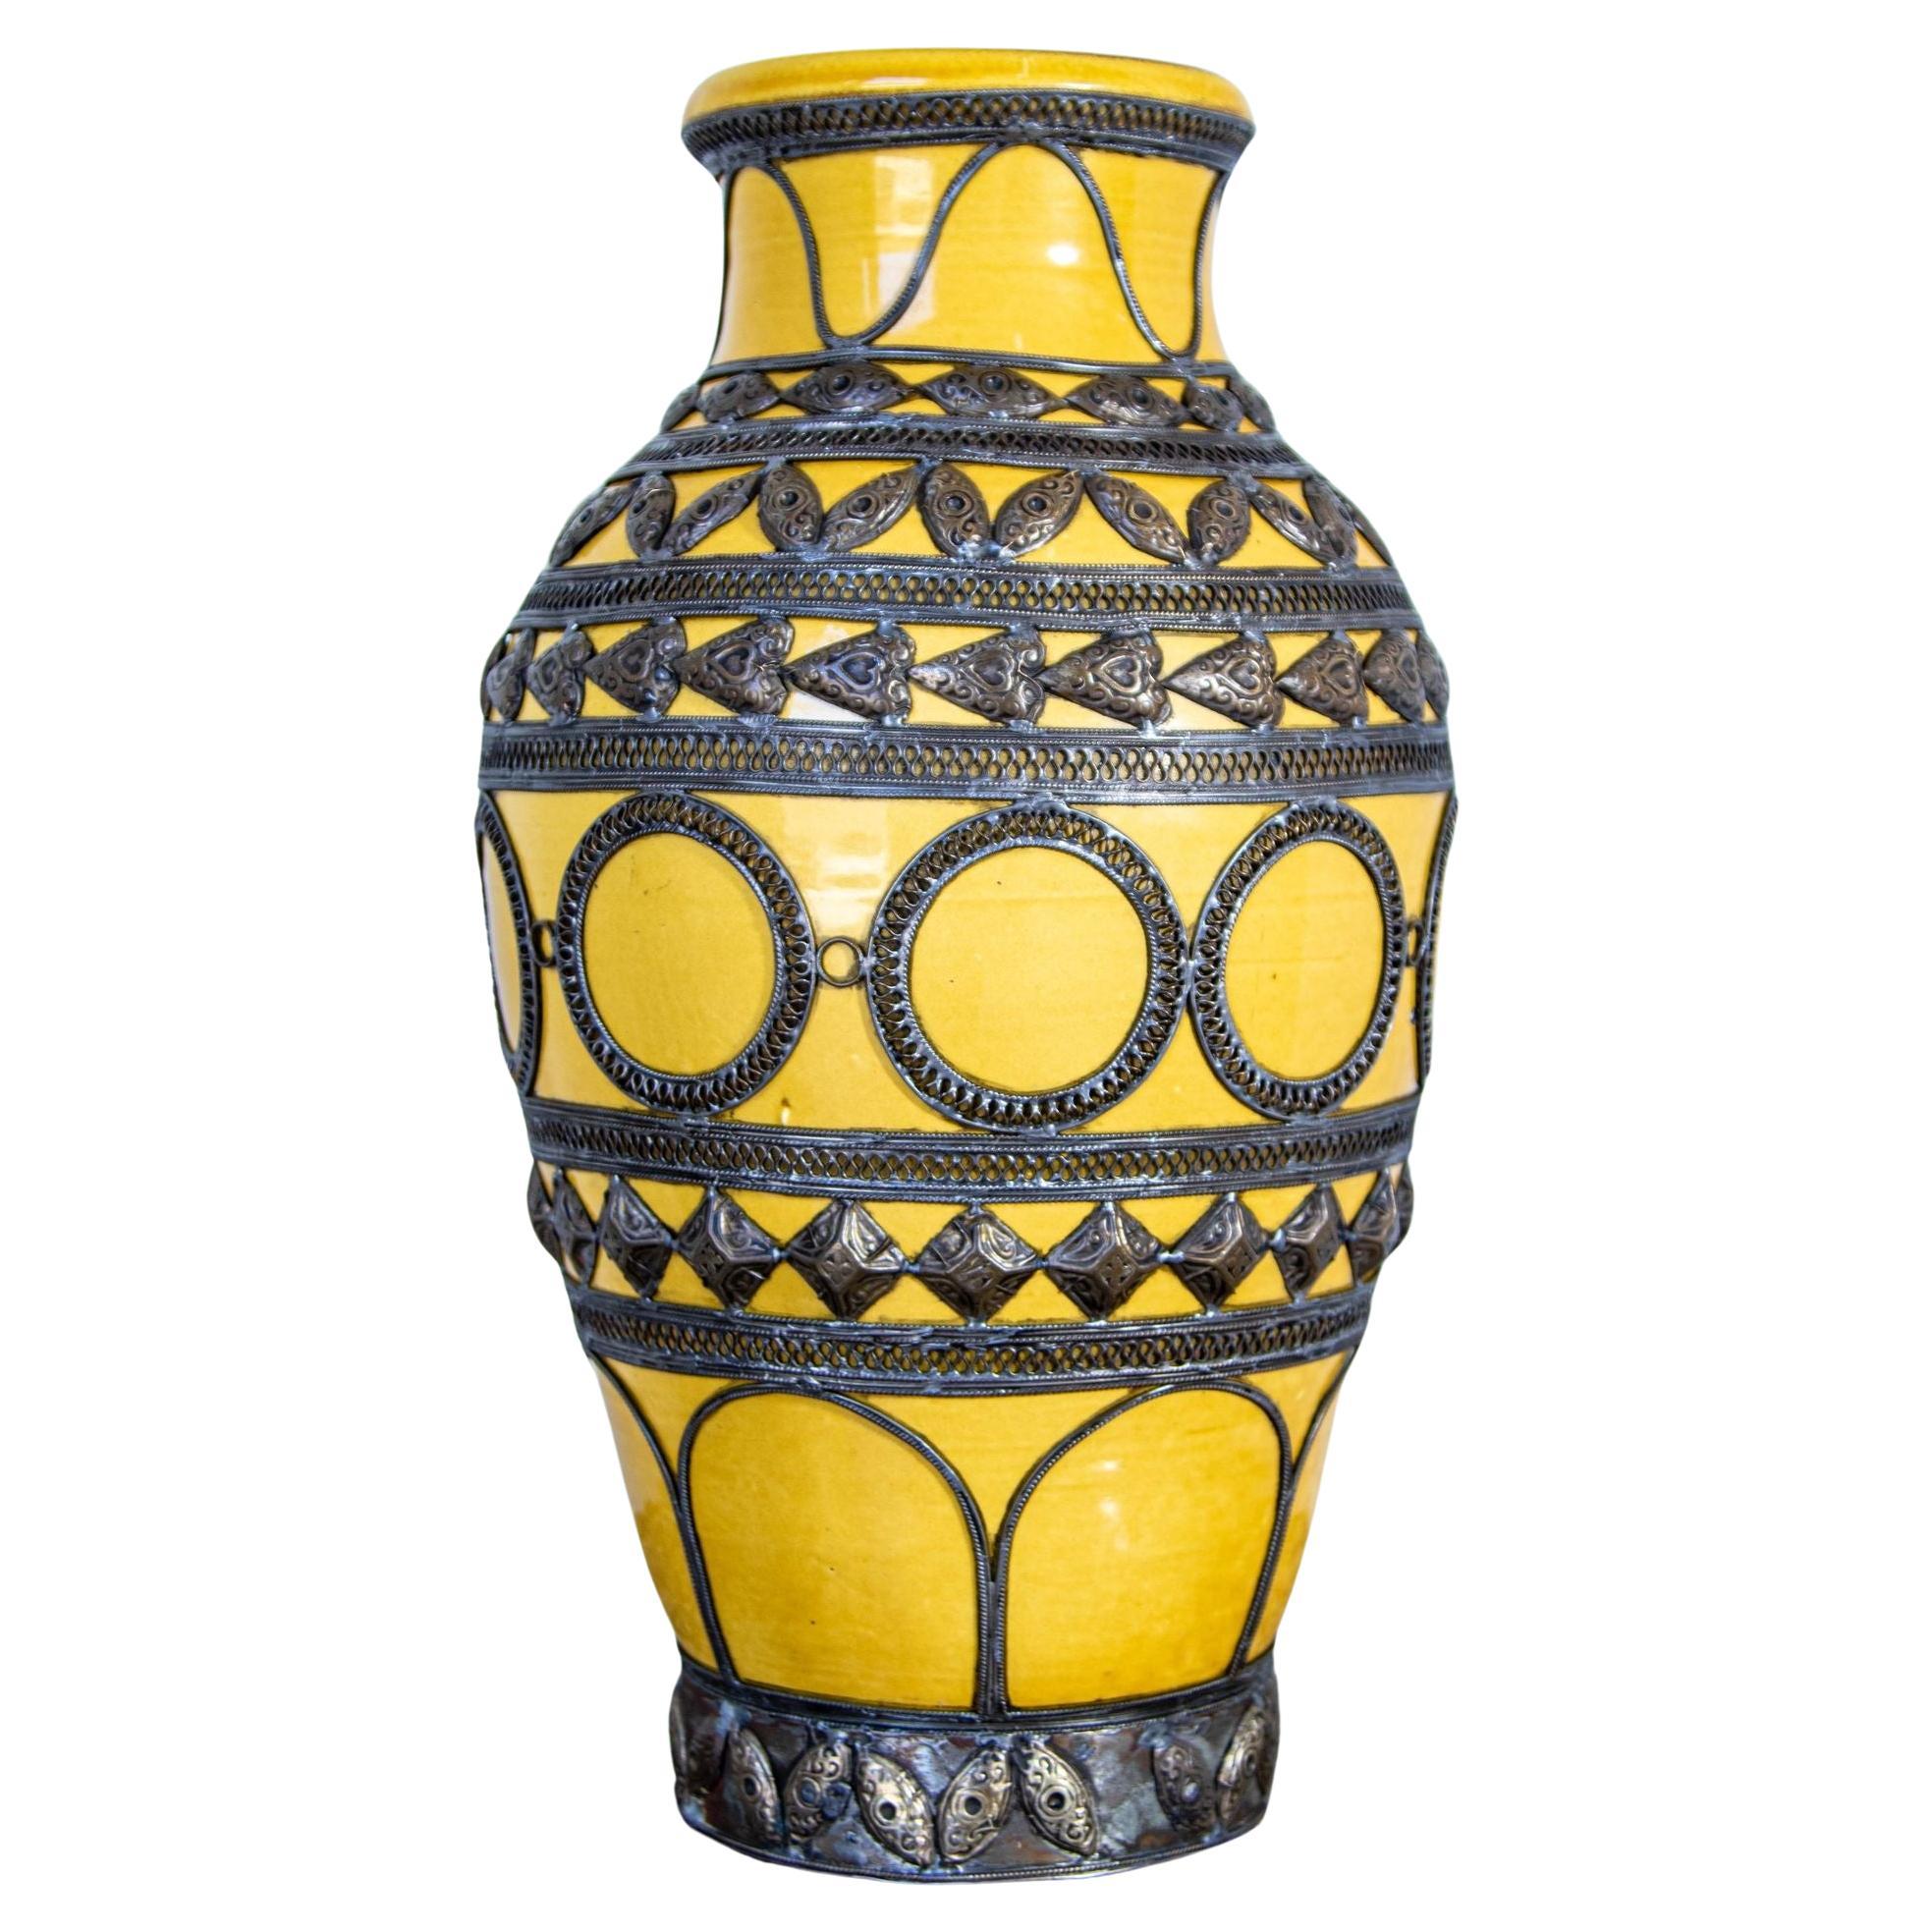 Antique Moroccan Ceramic Vase Bright Yellow with Metal Moorish Filigree overlaid For Sale